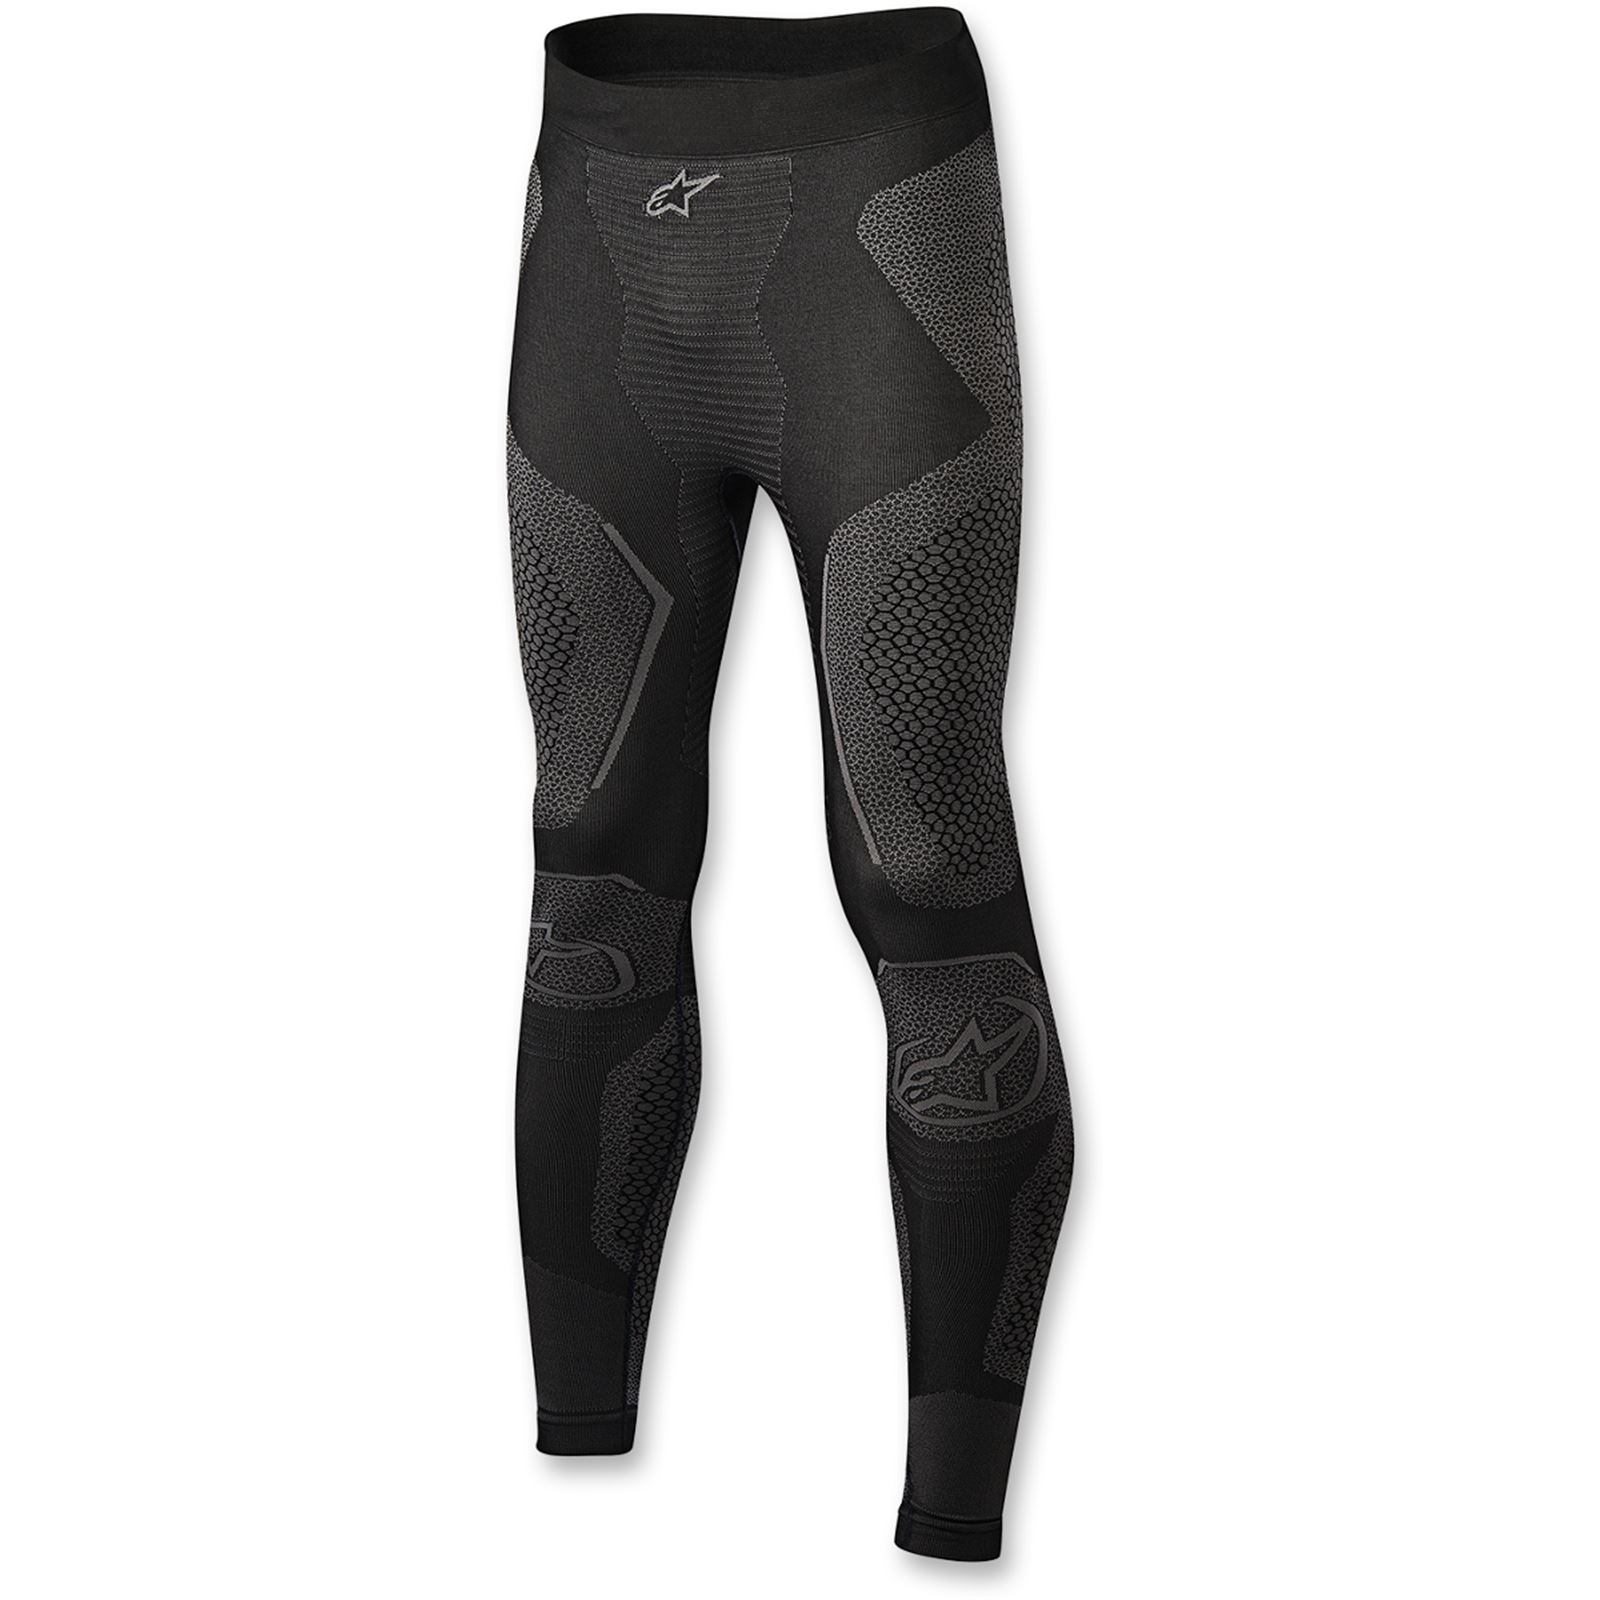 Alpinestars Ride Tech Winter Underwear Bottom - Black/Grey - X-Small/Small